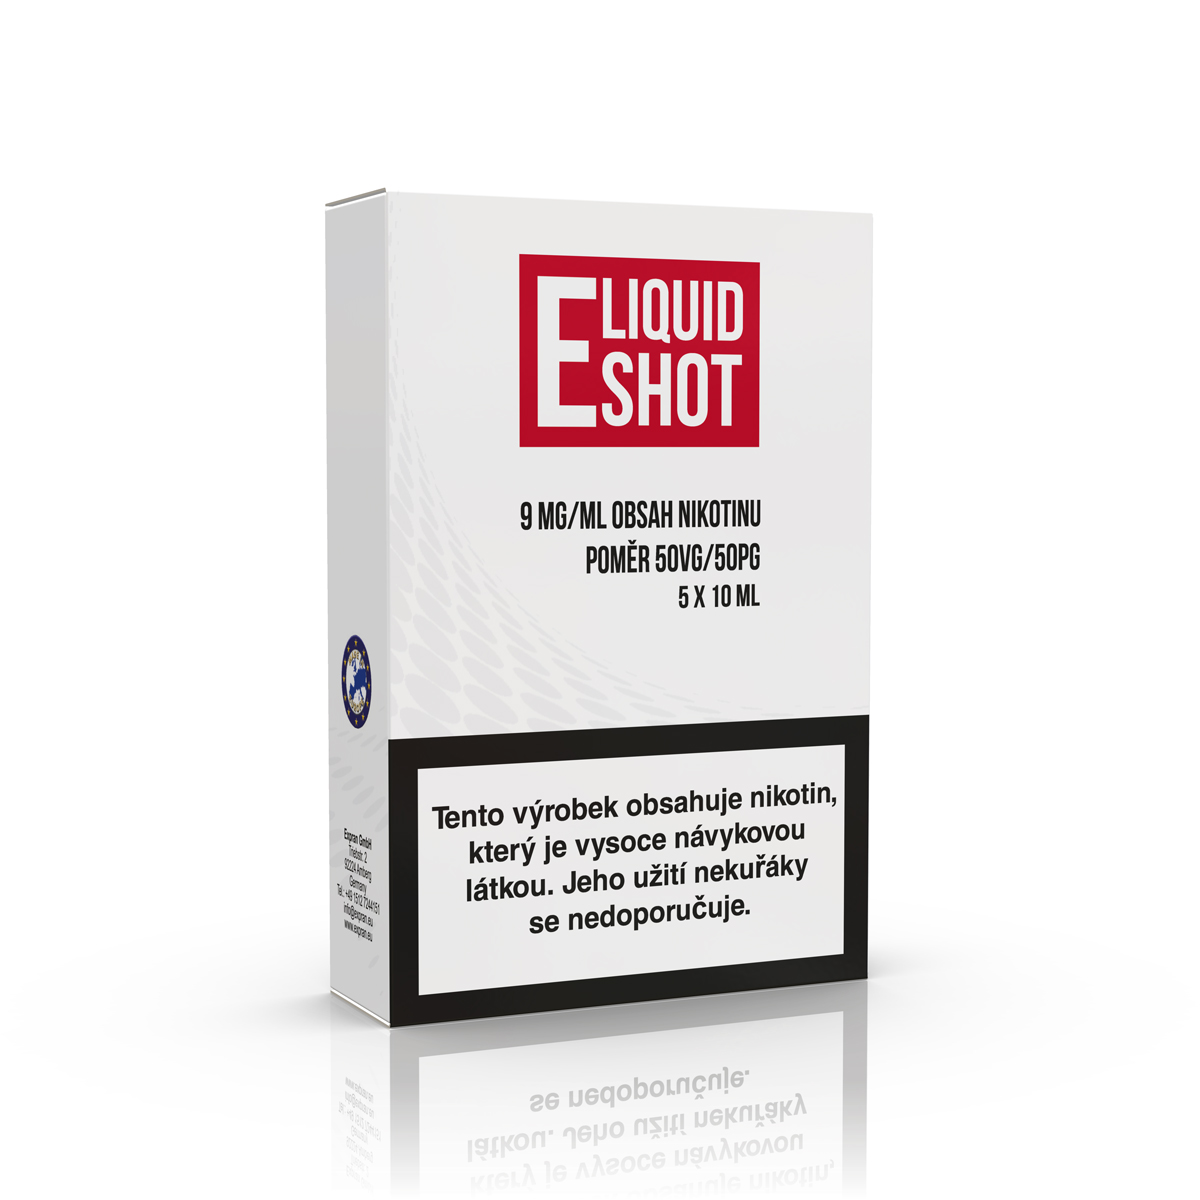 EXPRAN E-Liquid Shot Booster 50/50 9mg 5x10ml